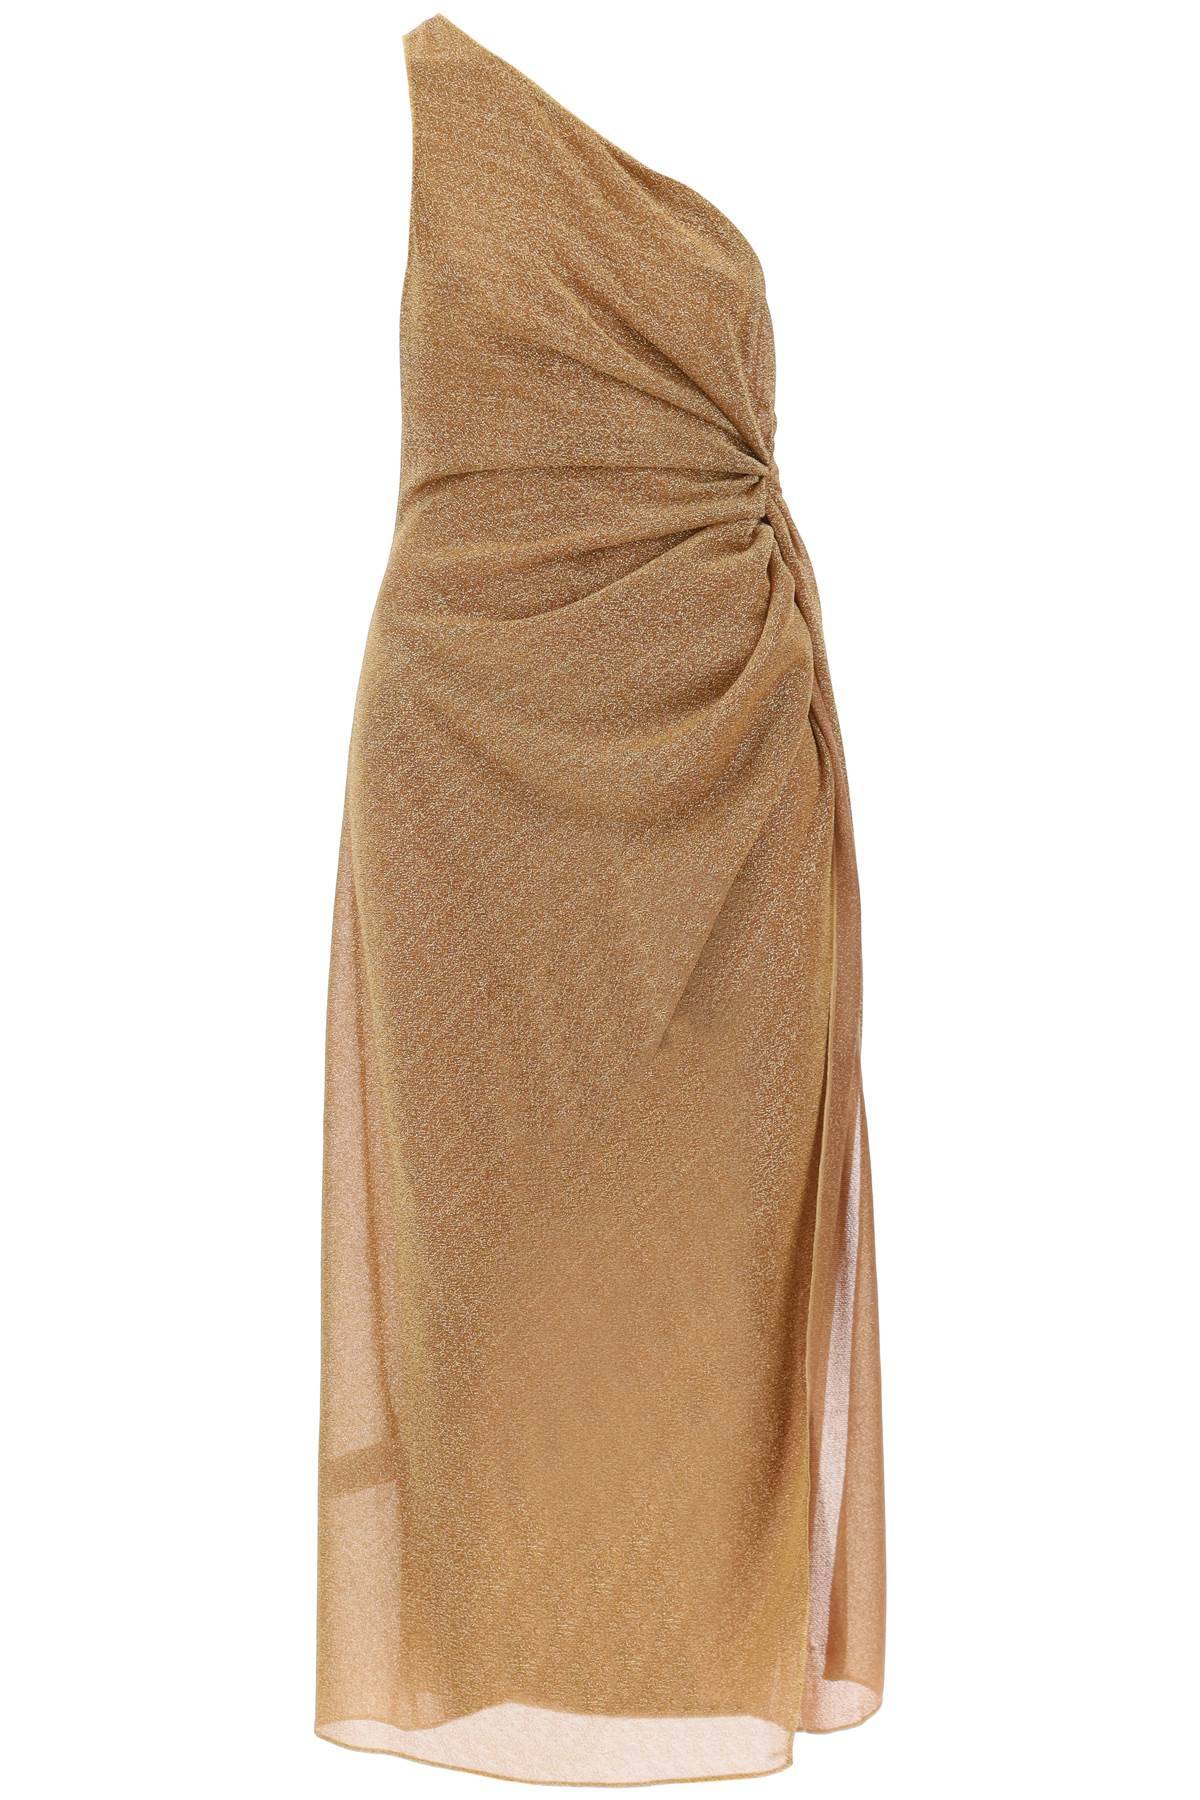 OSÉREE OSÉREE one-shoulder dress in lurex knit